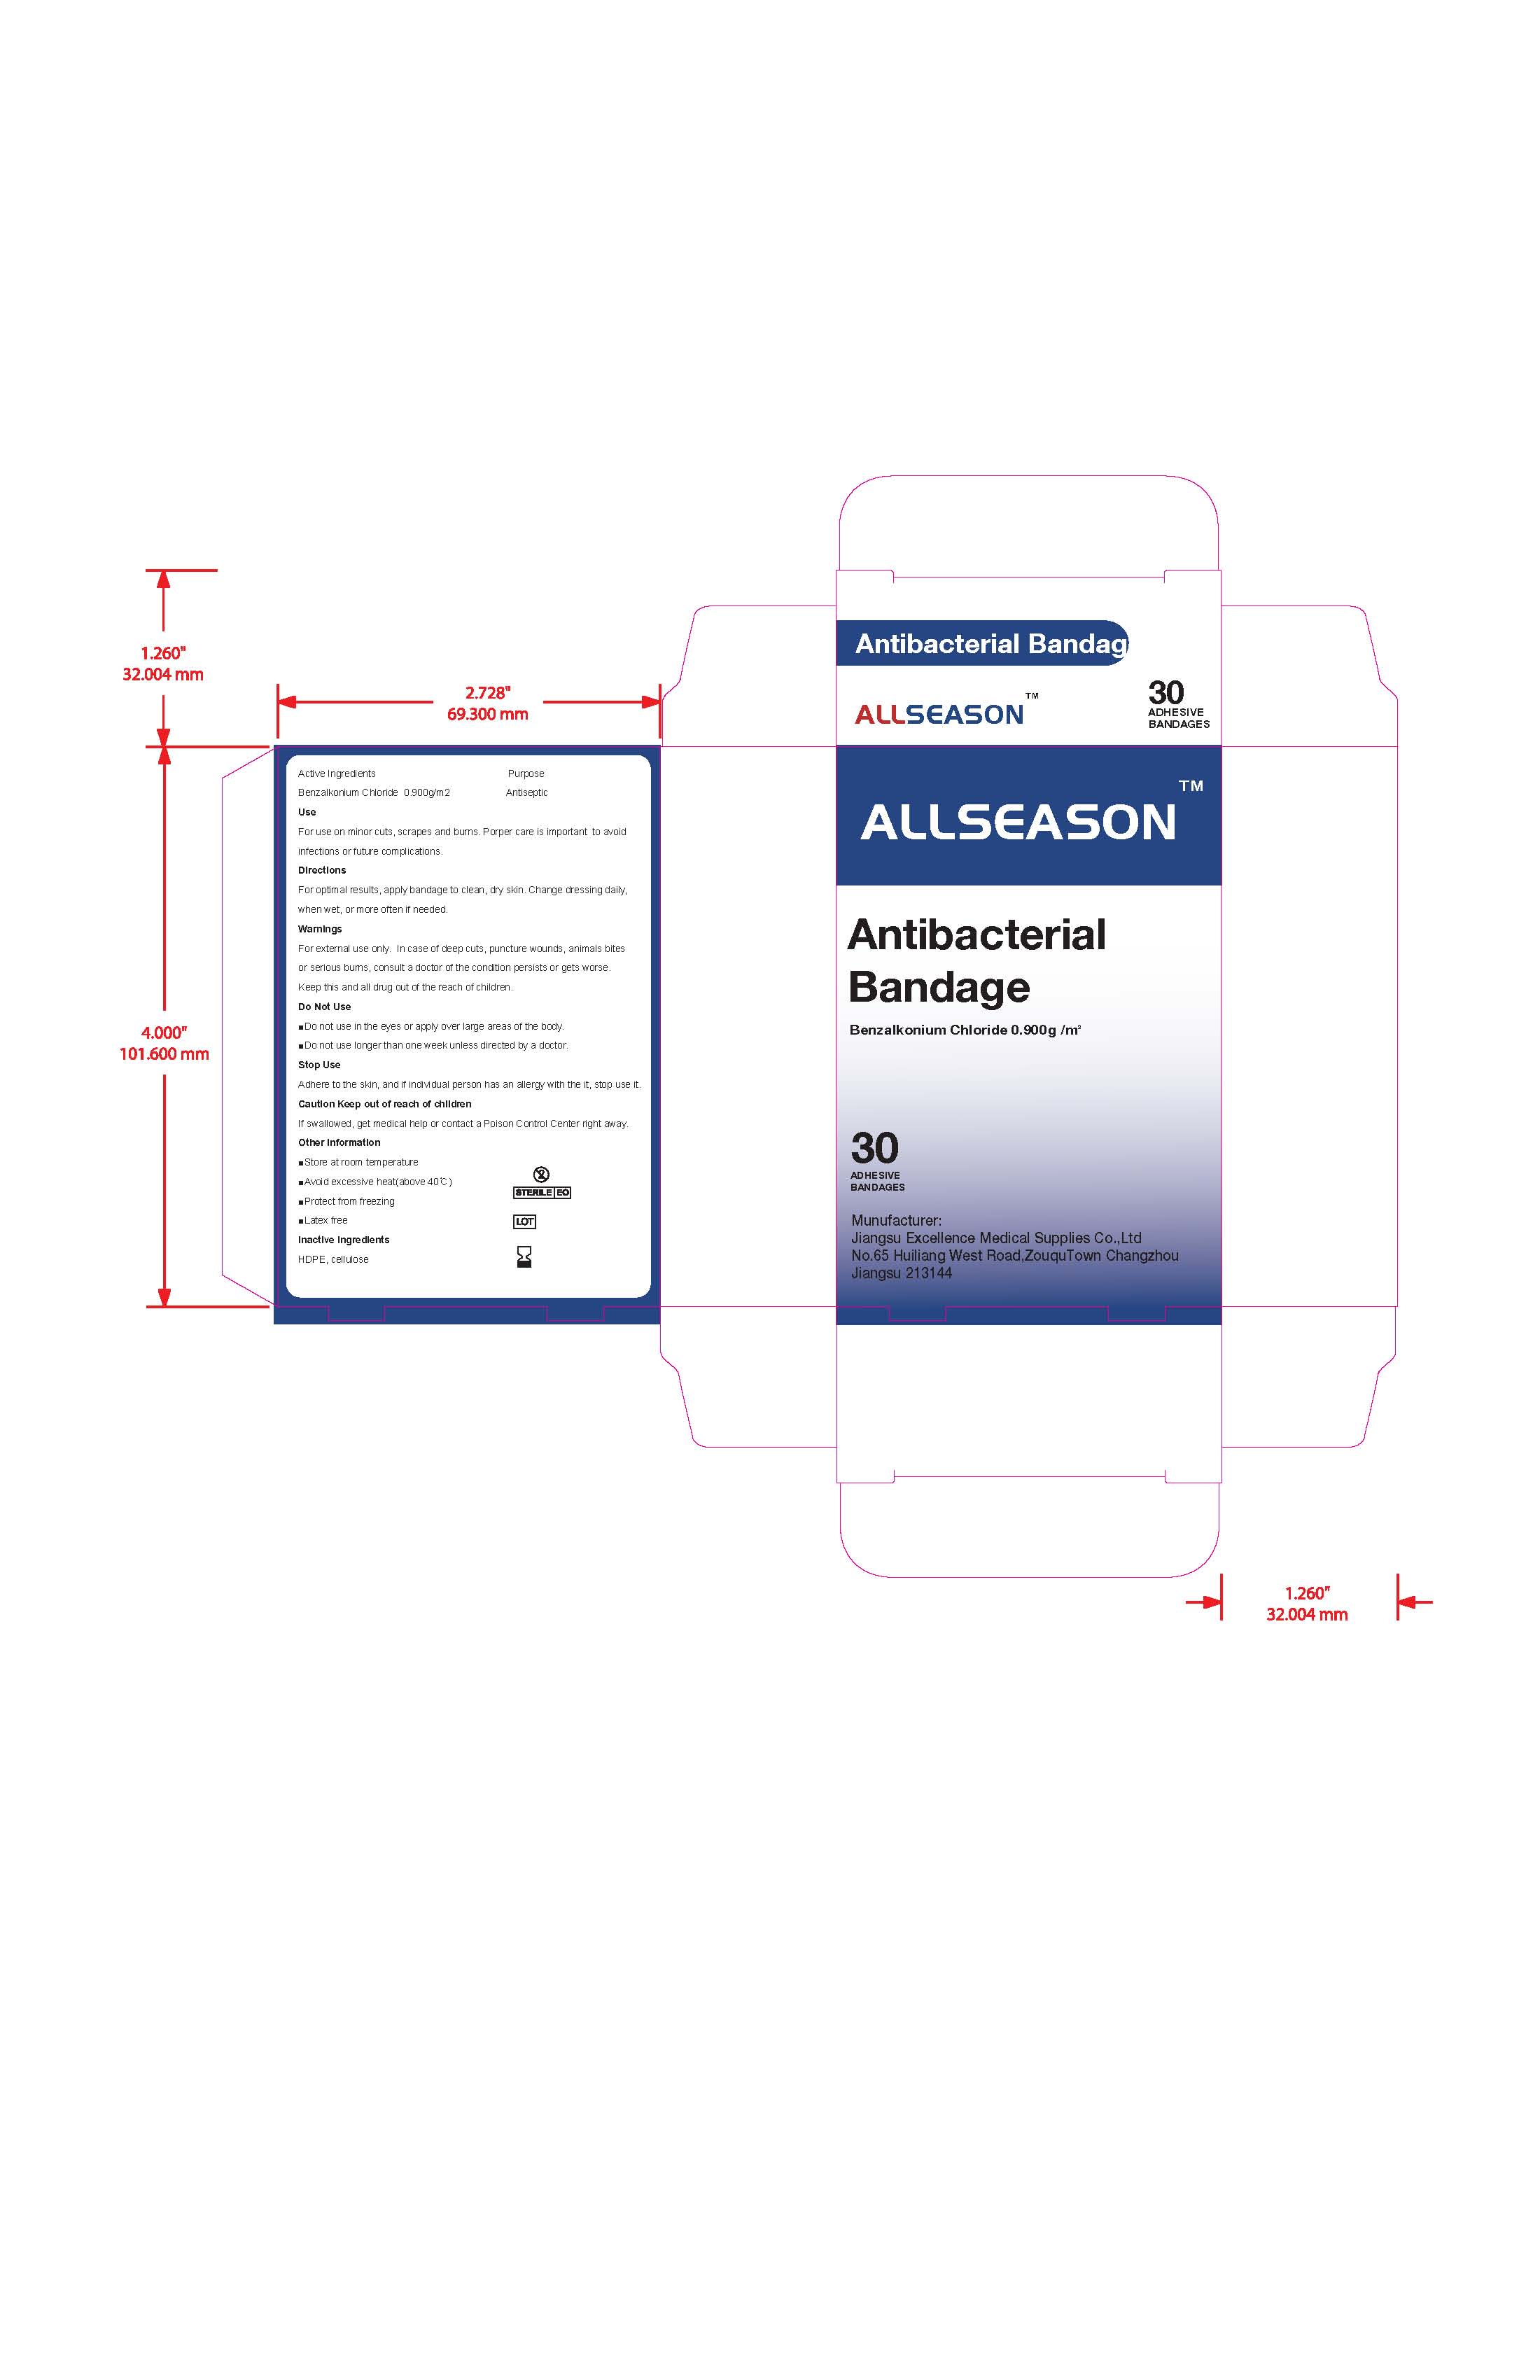 Allseason Antibacterial Bandage | Benzalkonium Chloride Dressing while Breastfeeding